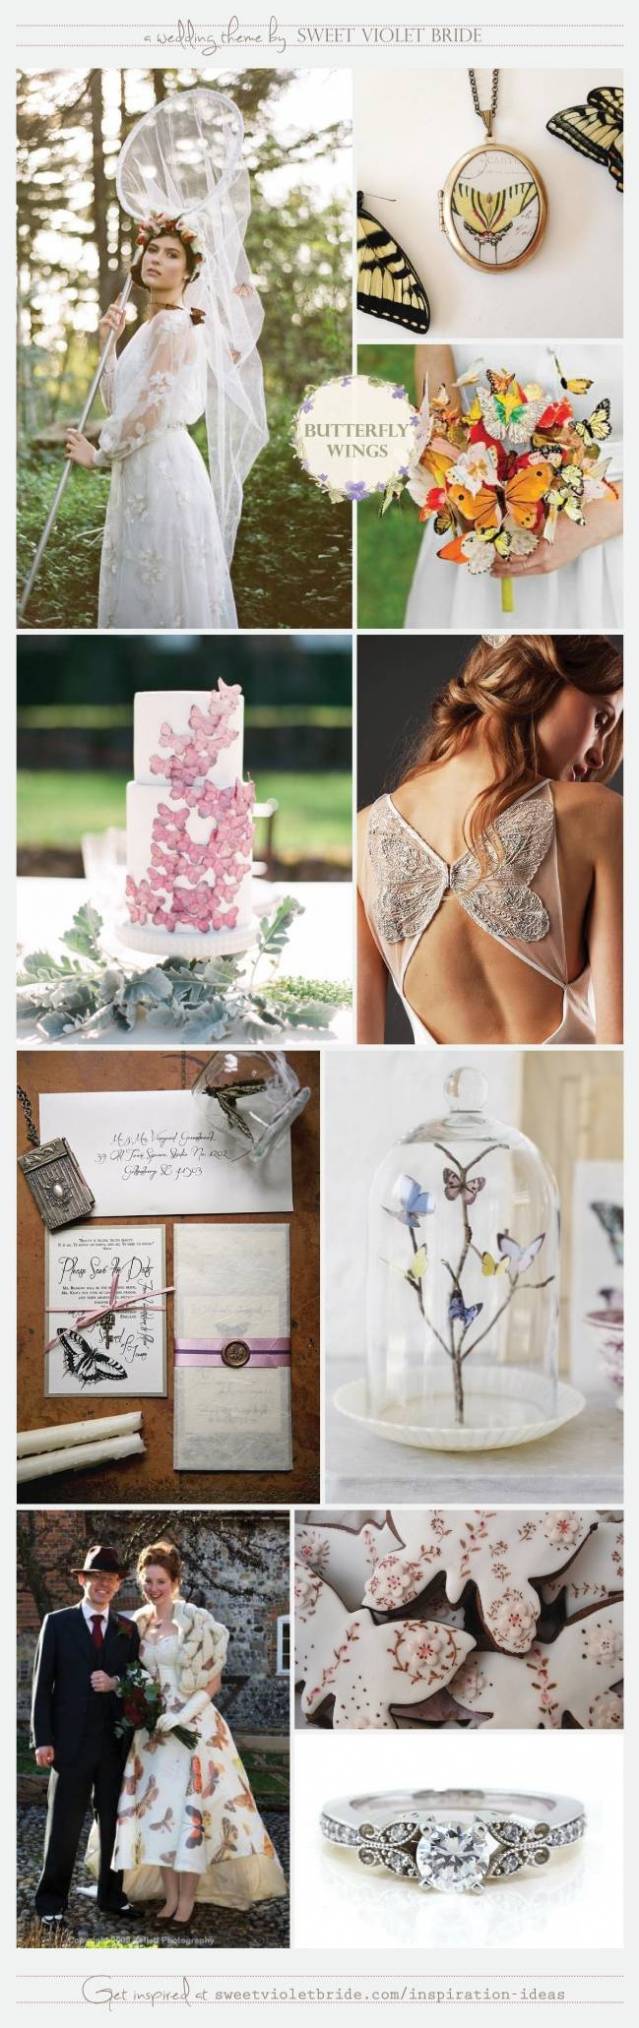 Butterfly Wings Wedding Inspiration Board by Sweet Violet Bride